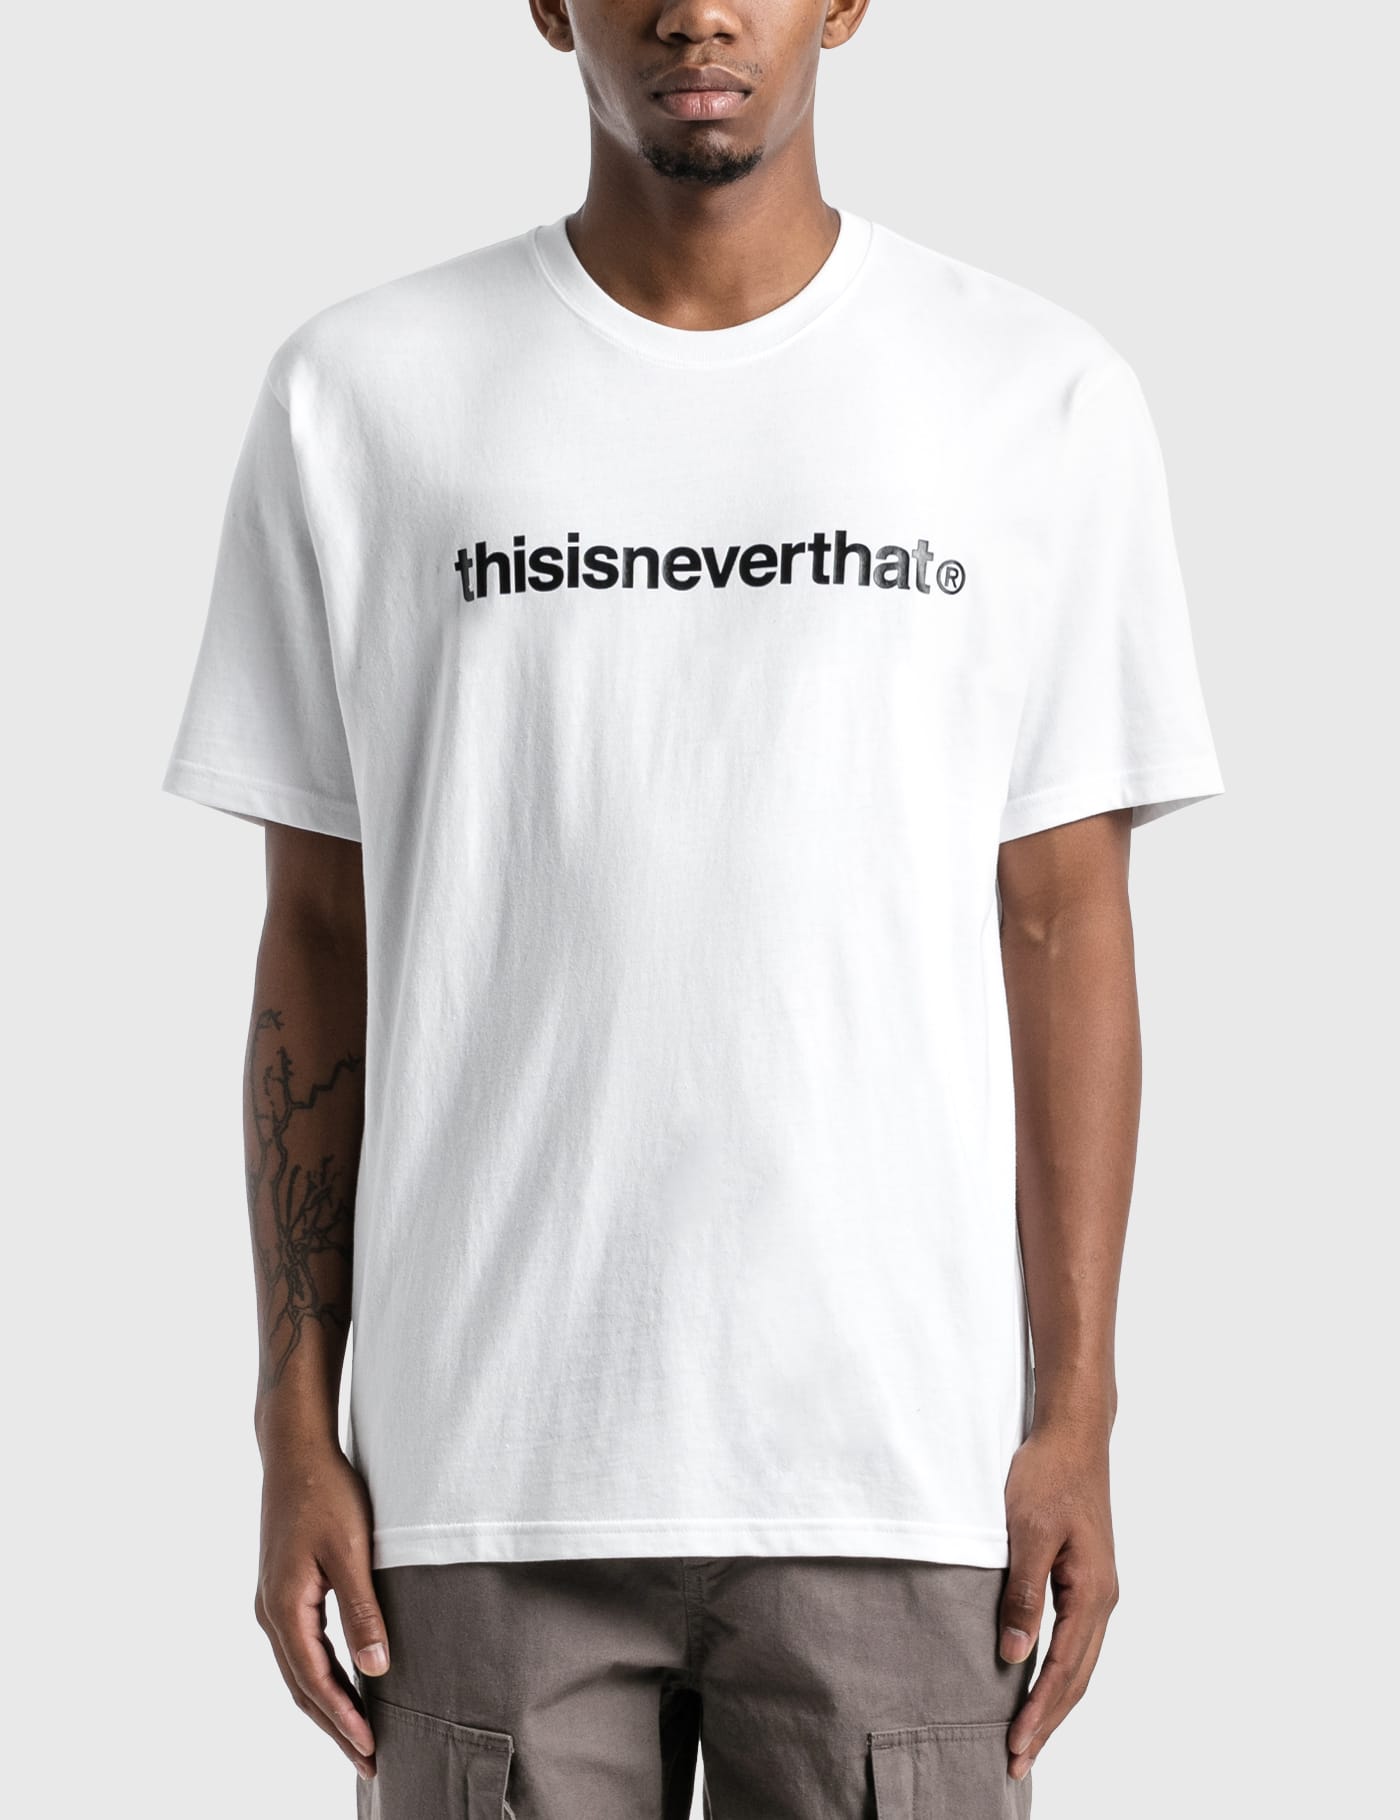 Thisisneverthat - thisisneverthat T-logo T-Shirt | HBX - Globally 